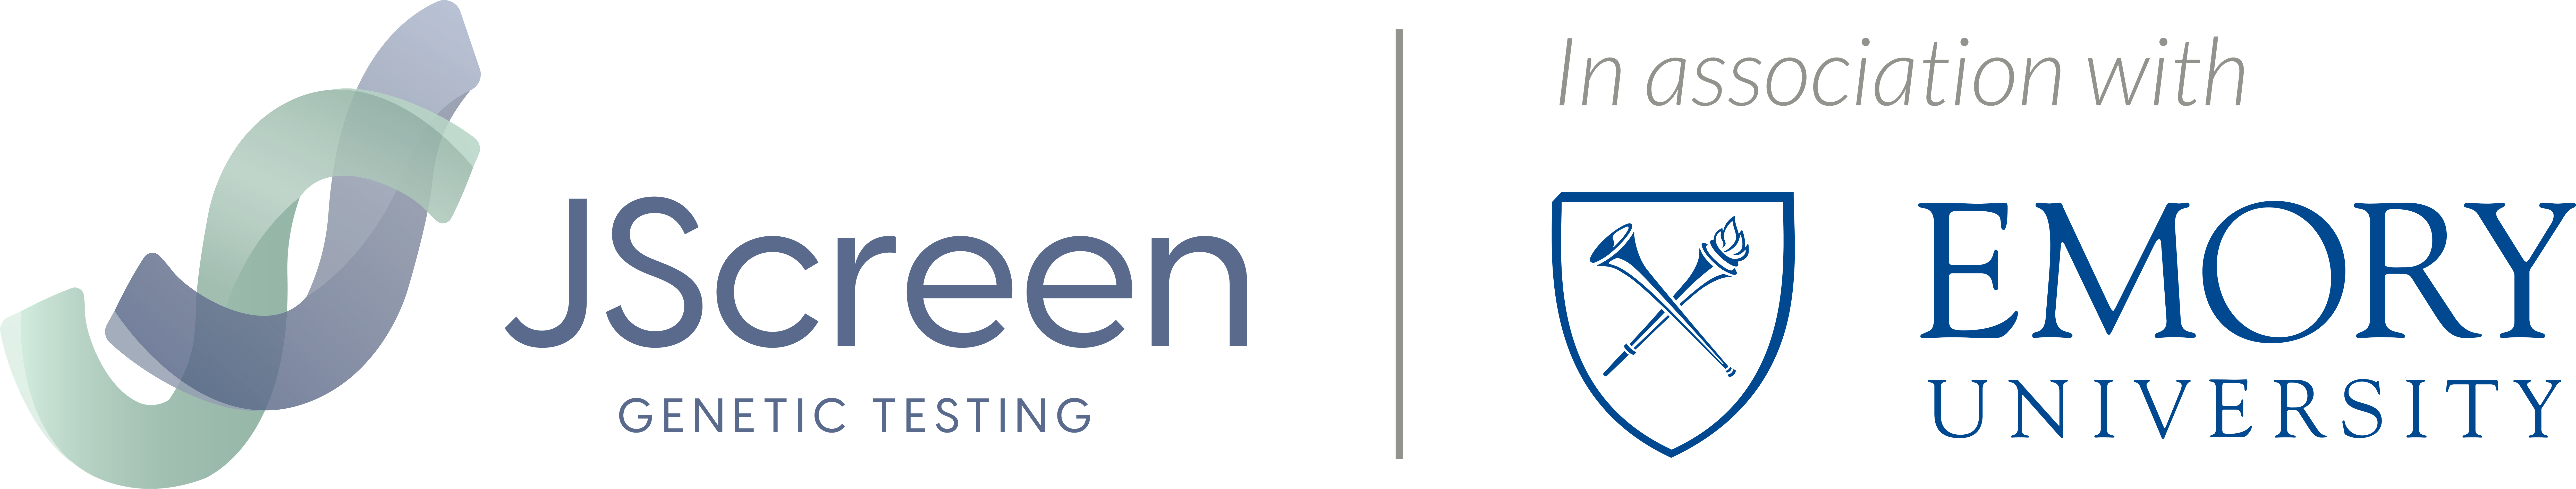 JScreen logo